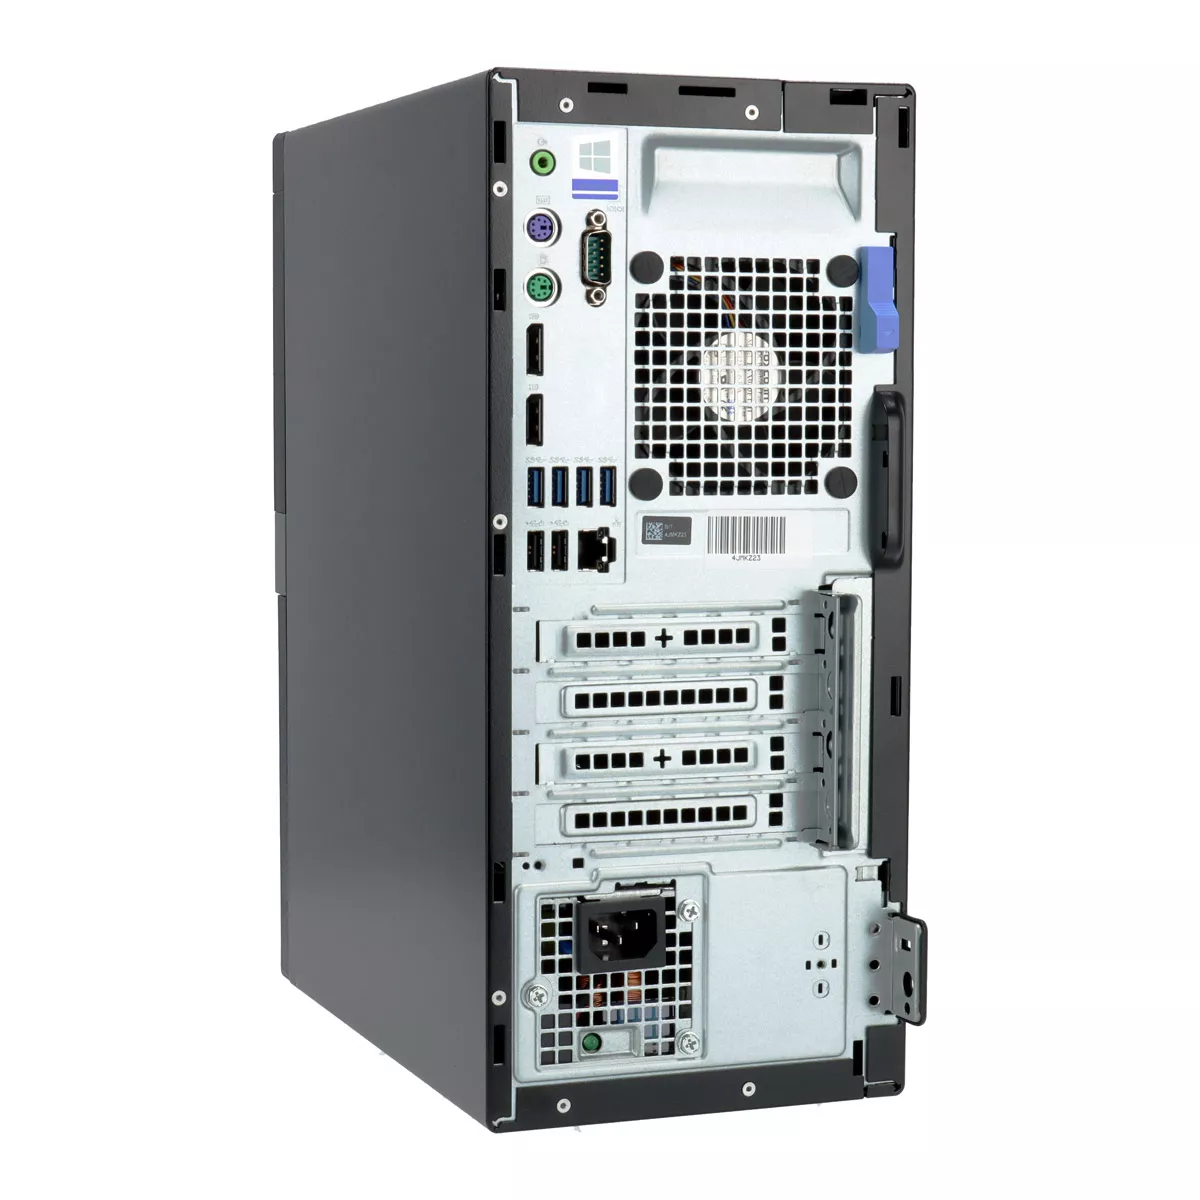 Dell Optiplex 7070 Mini Tower Core i7 9700 16 GB 240 GB SSD M.2 nVME A+